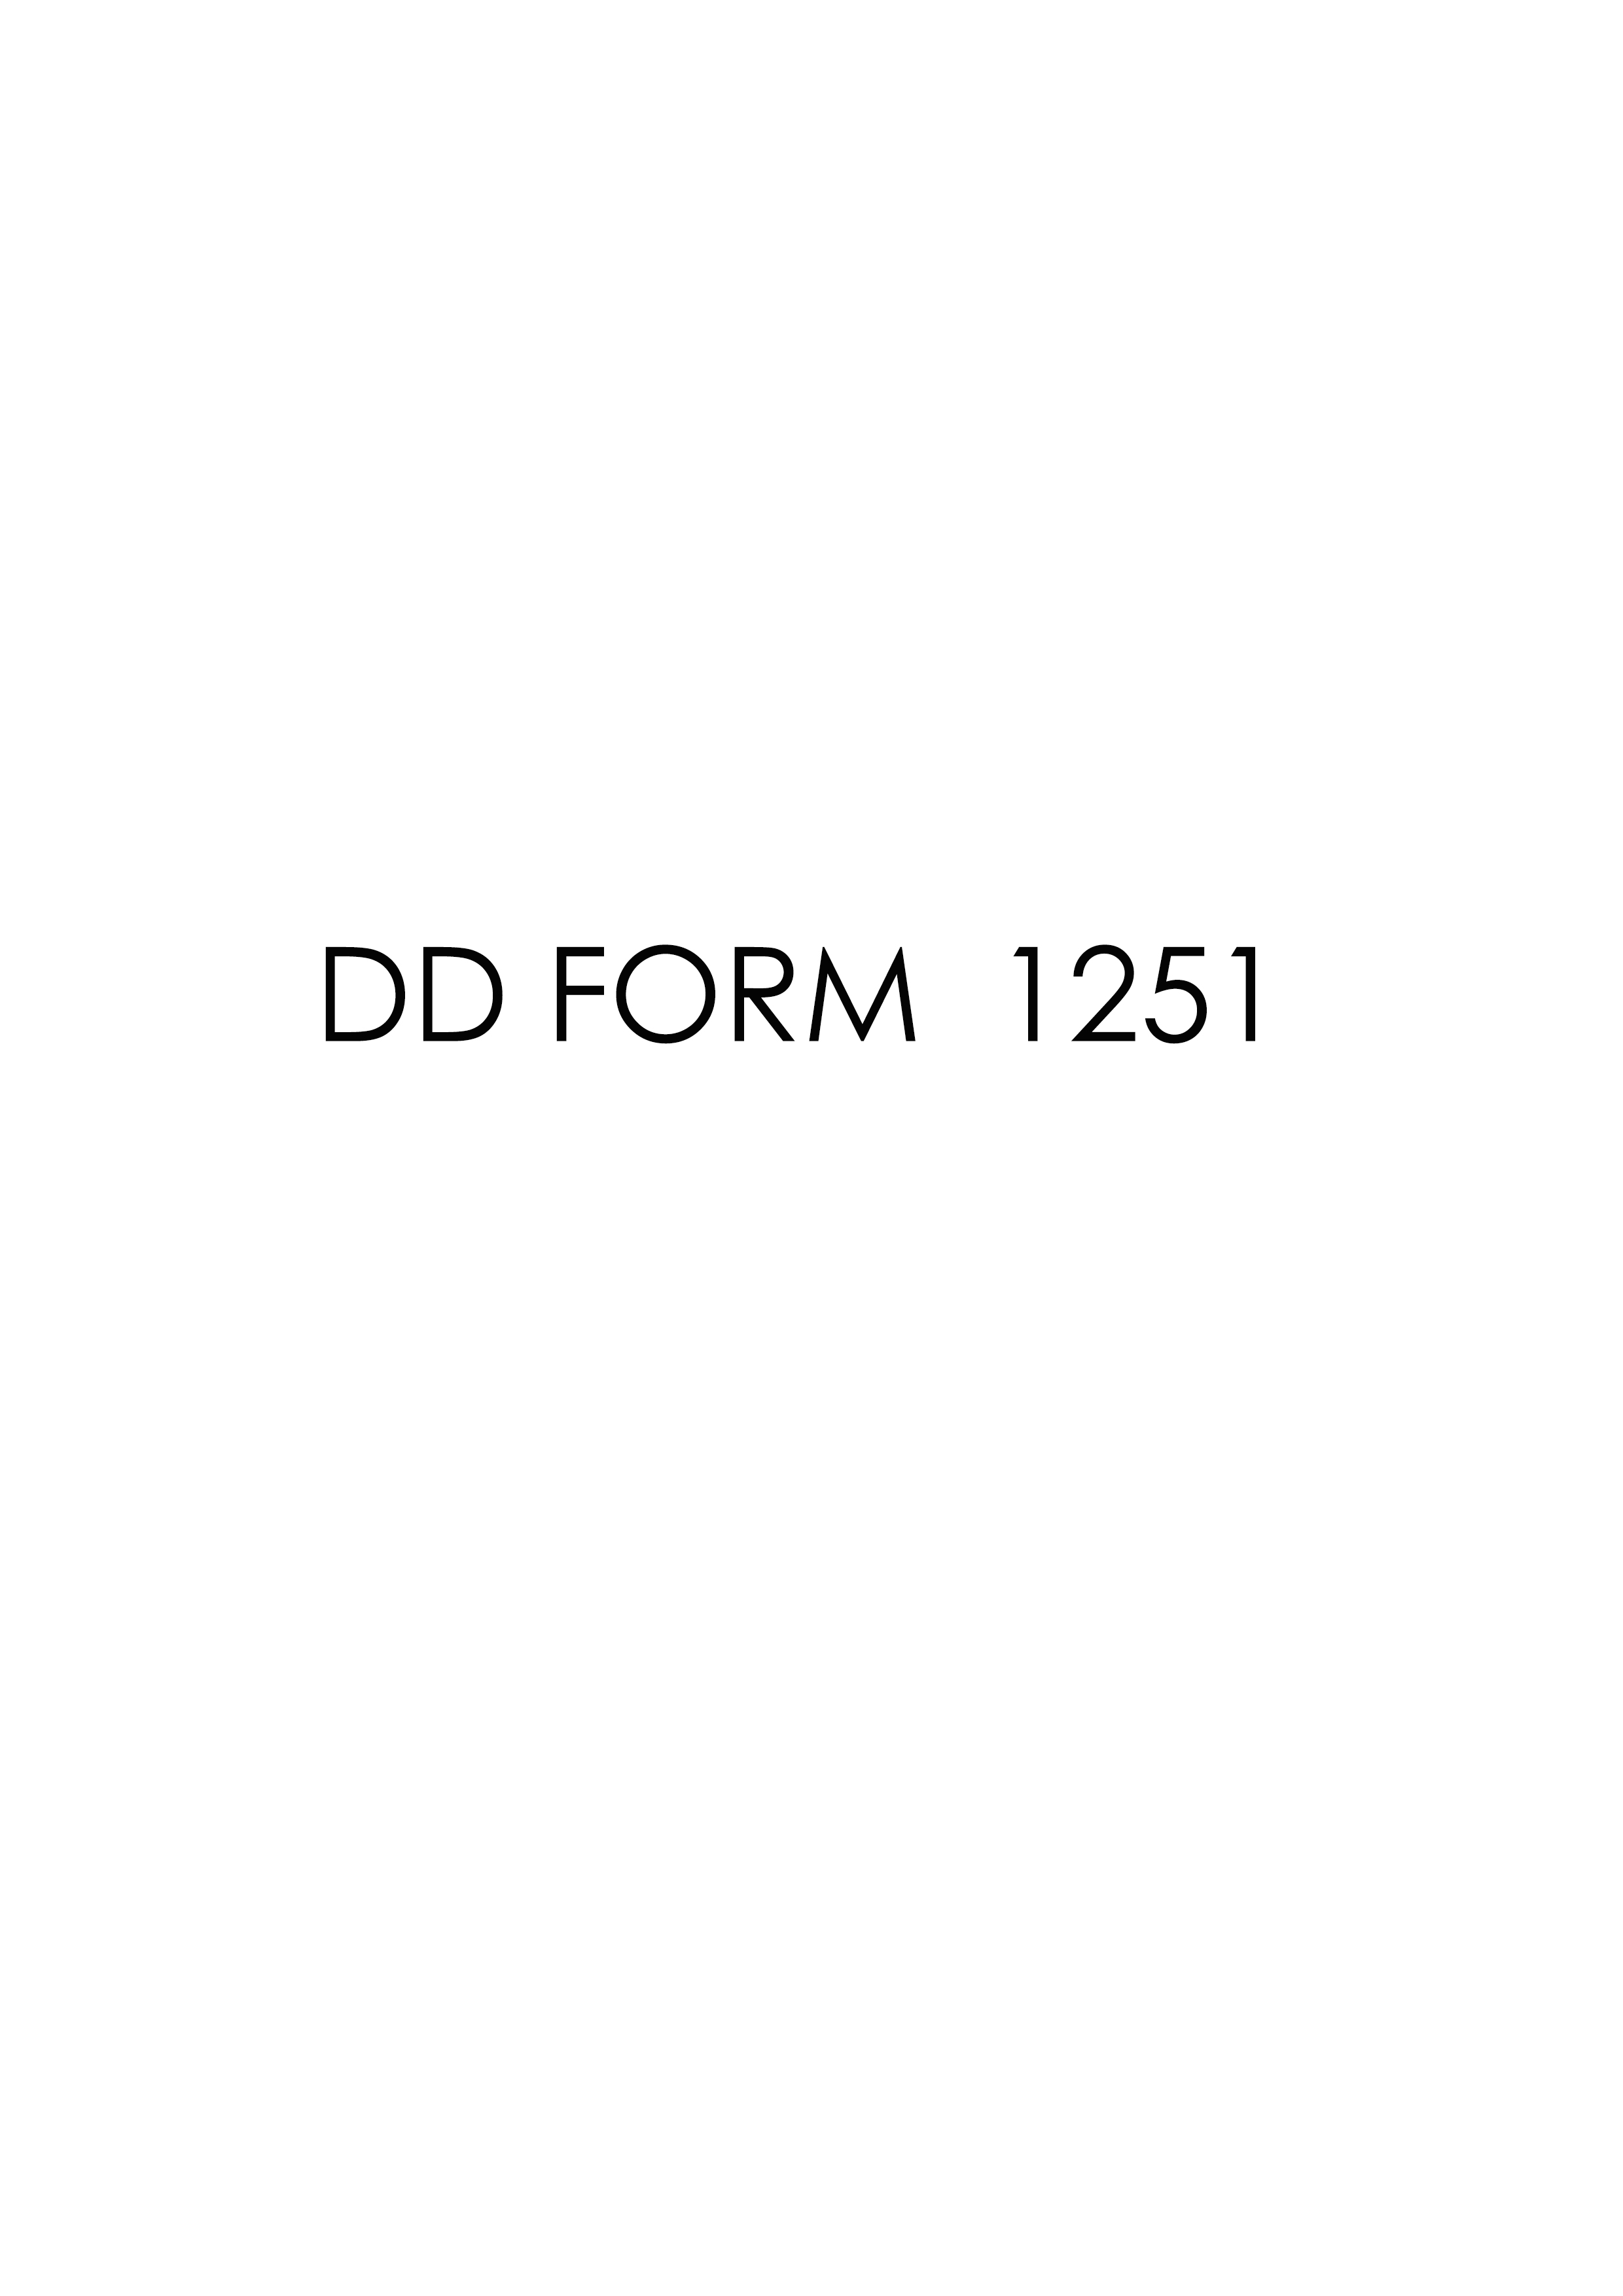 Download dd Form 1251